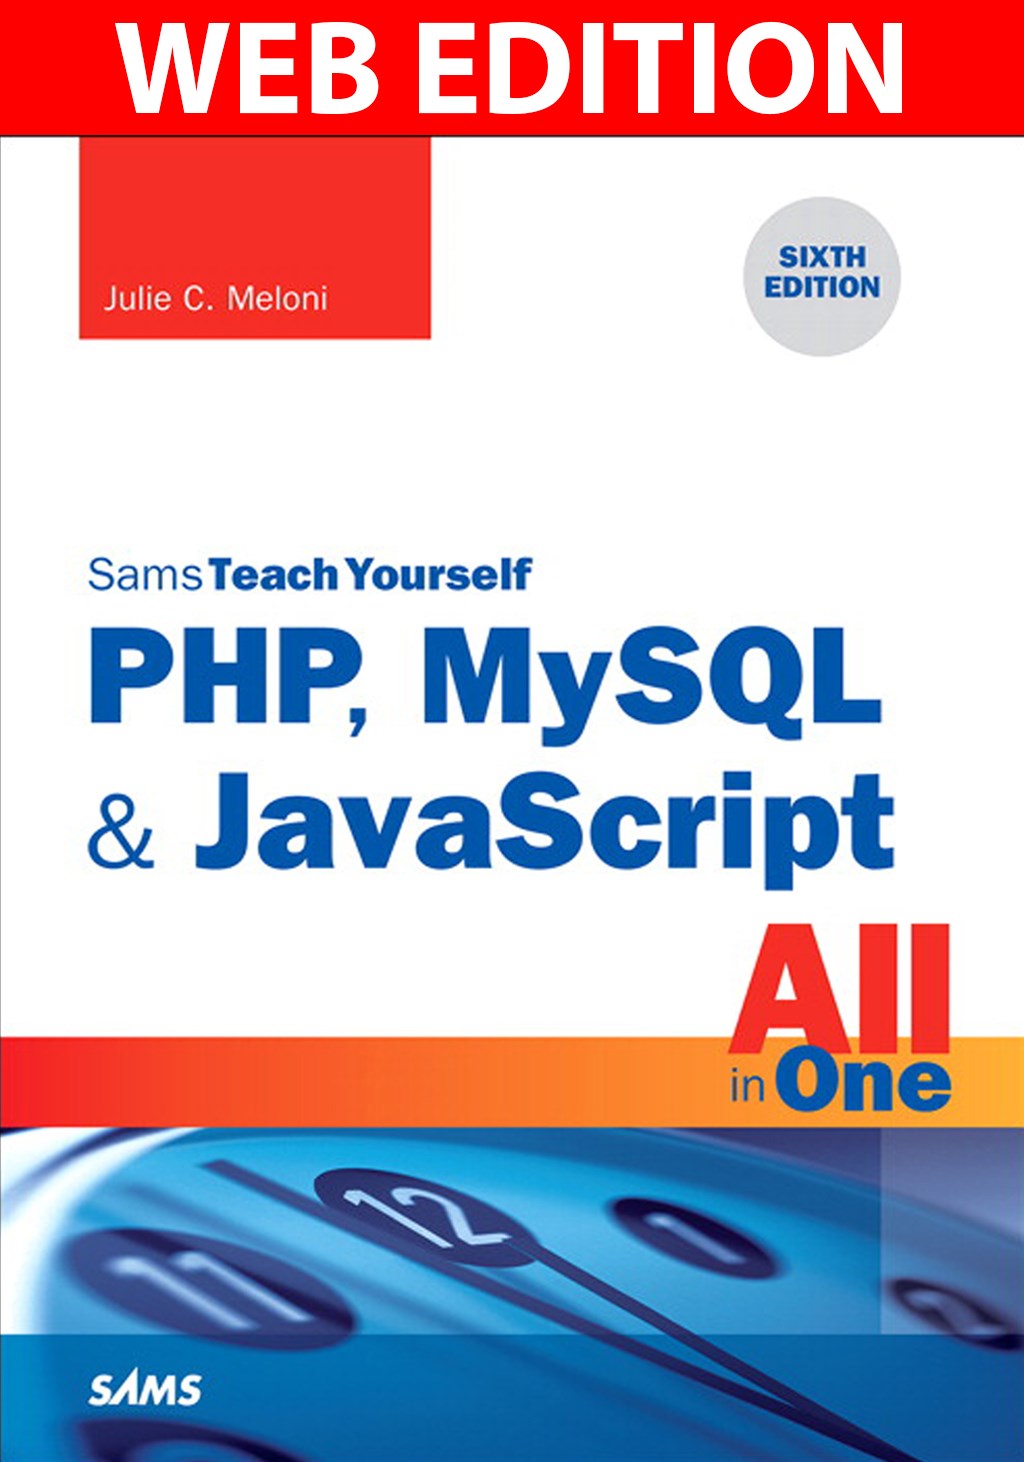 PHP, MySQL & JavaScript All in One, Sams Teach Yourself, Web Edition